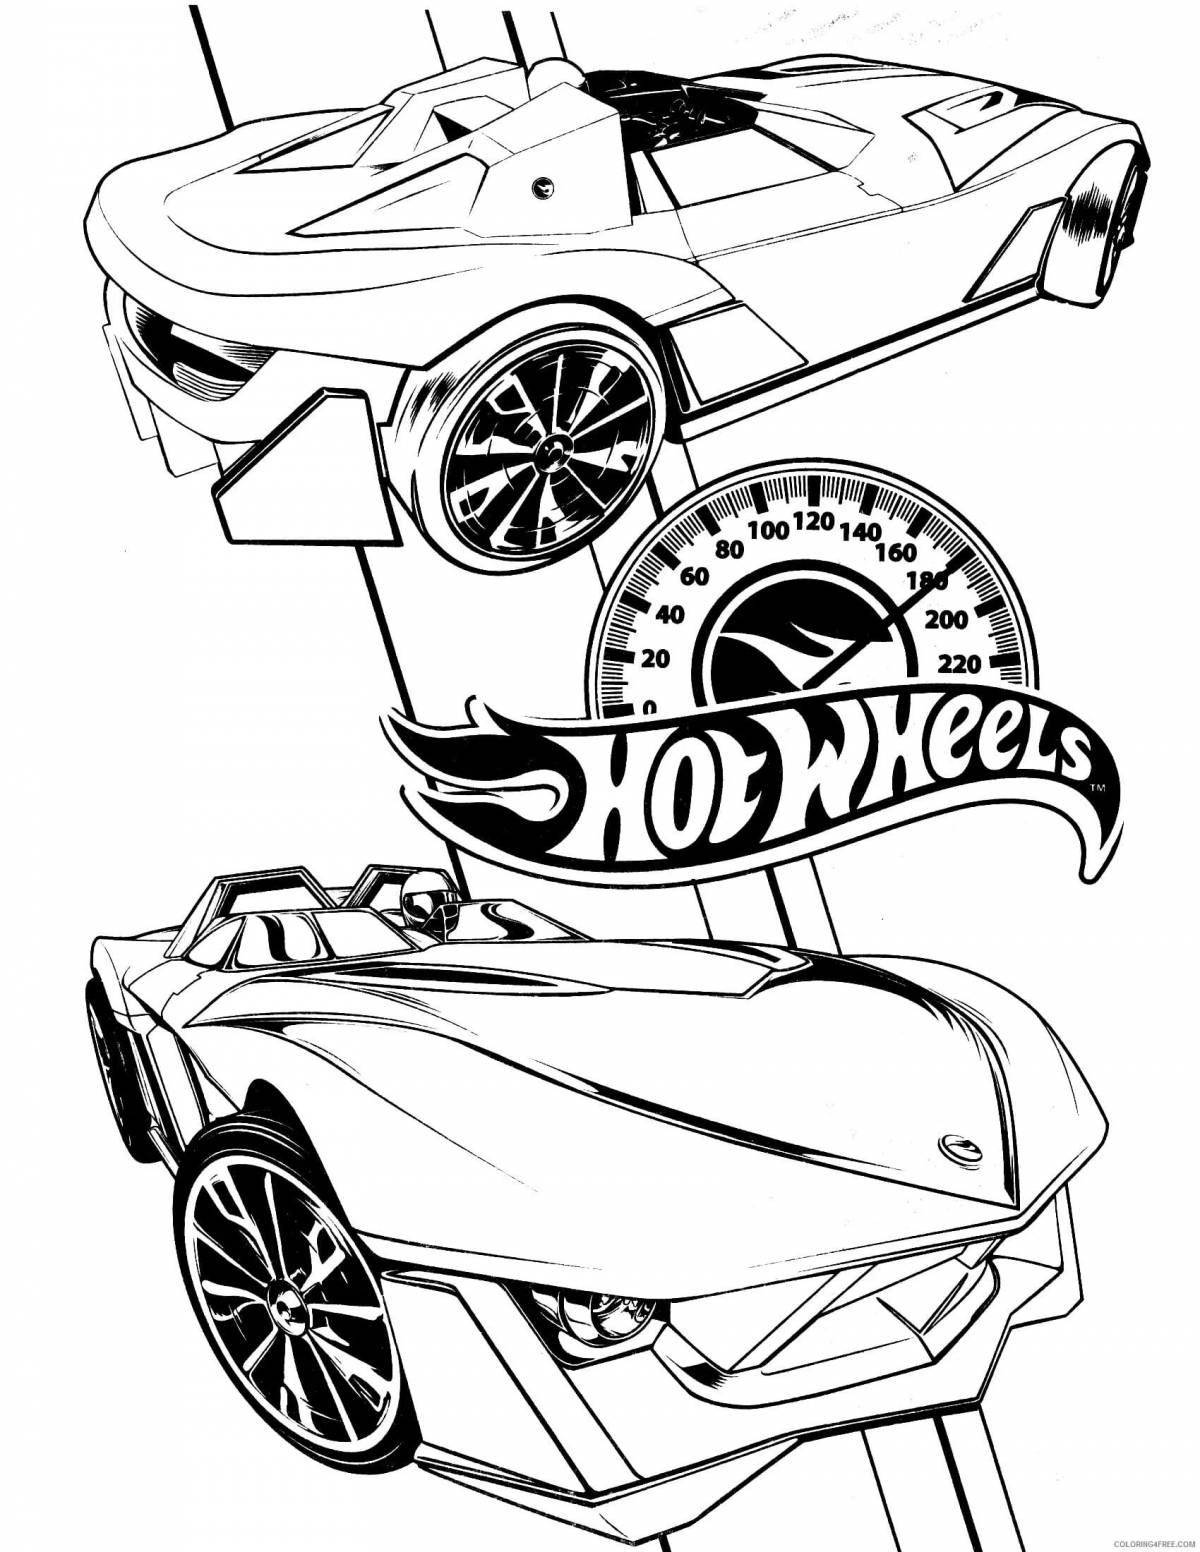 Fun hot wheels coloring book for kids